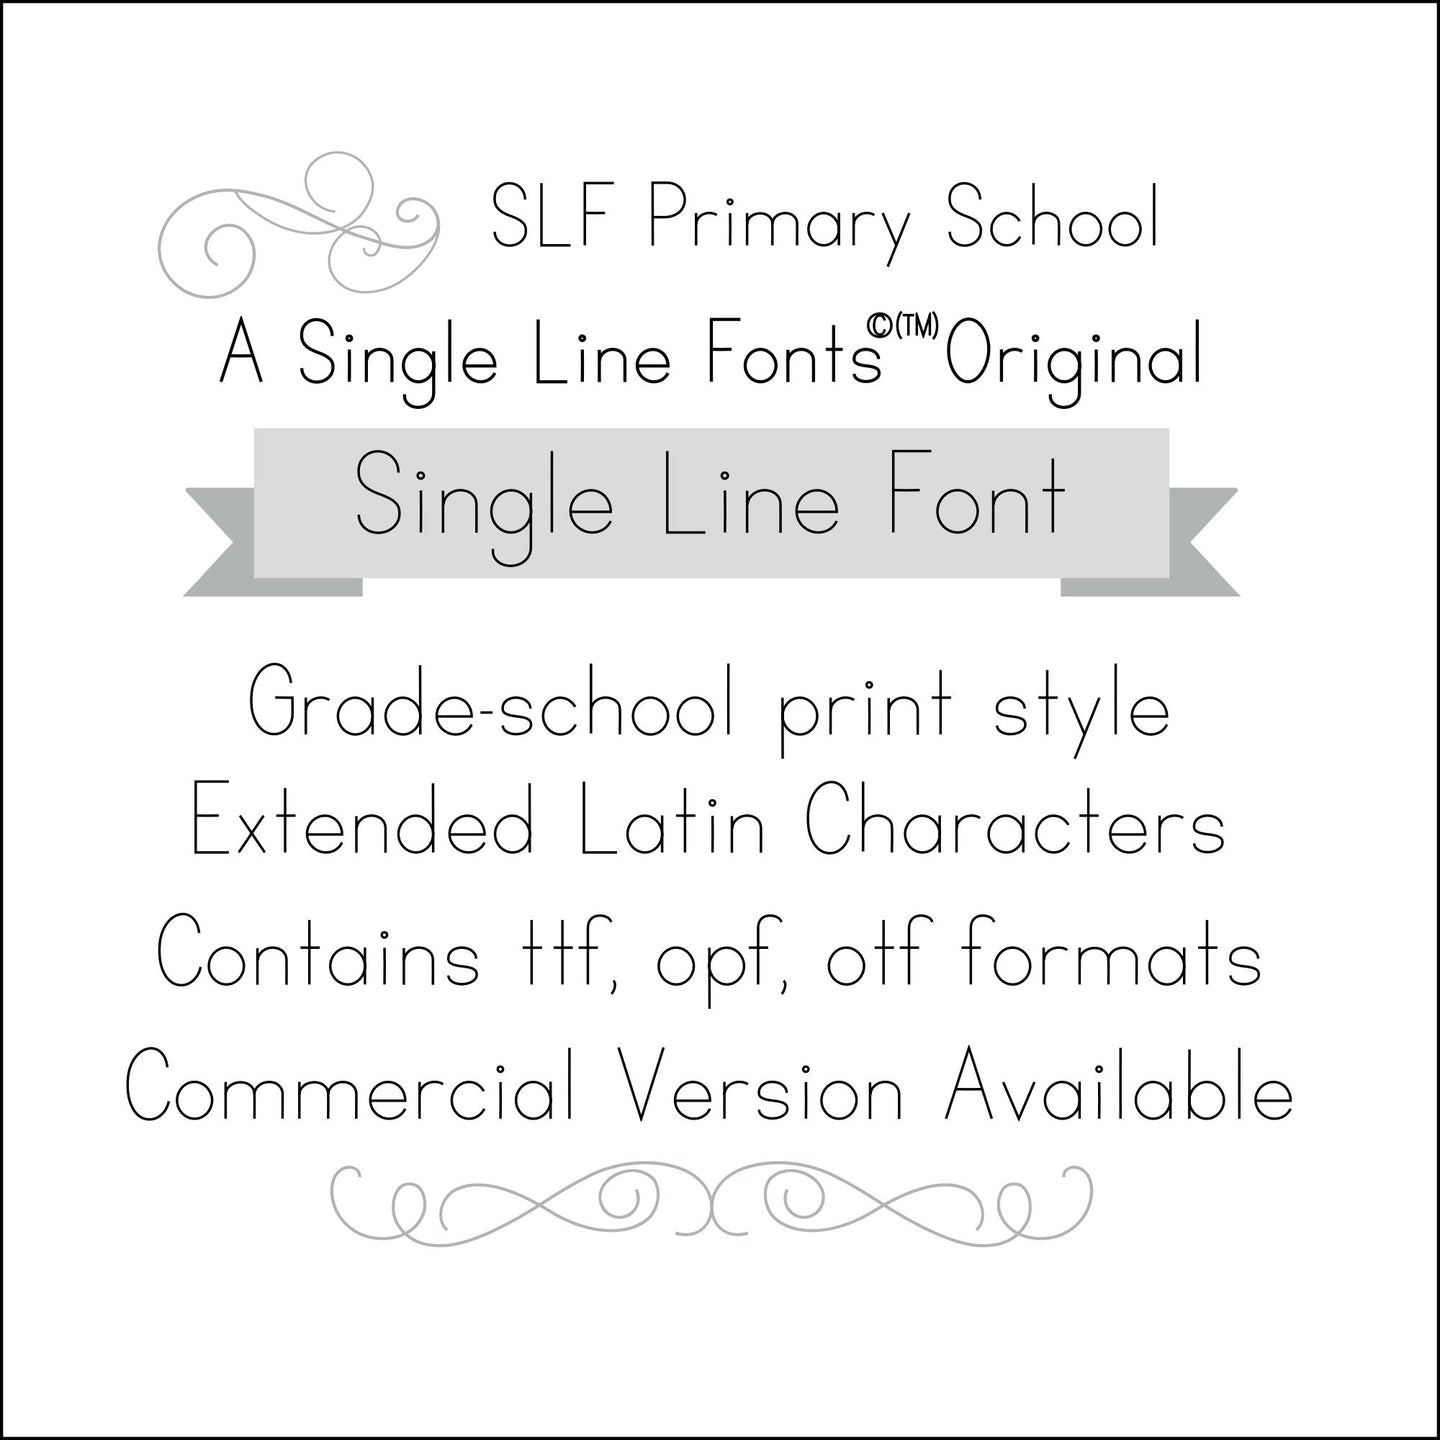 single line fonts slf primary school print style font scoring glowforge engraving pen tool cricut silhouette glowforge shaper origin and more